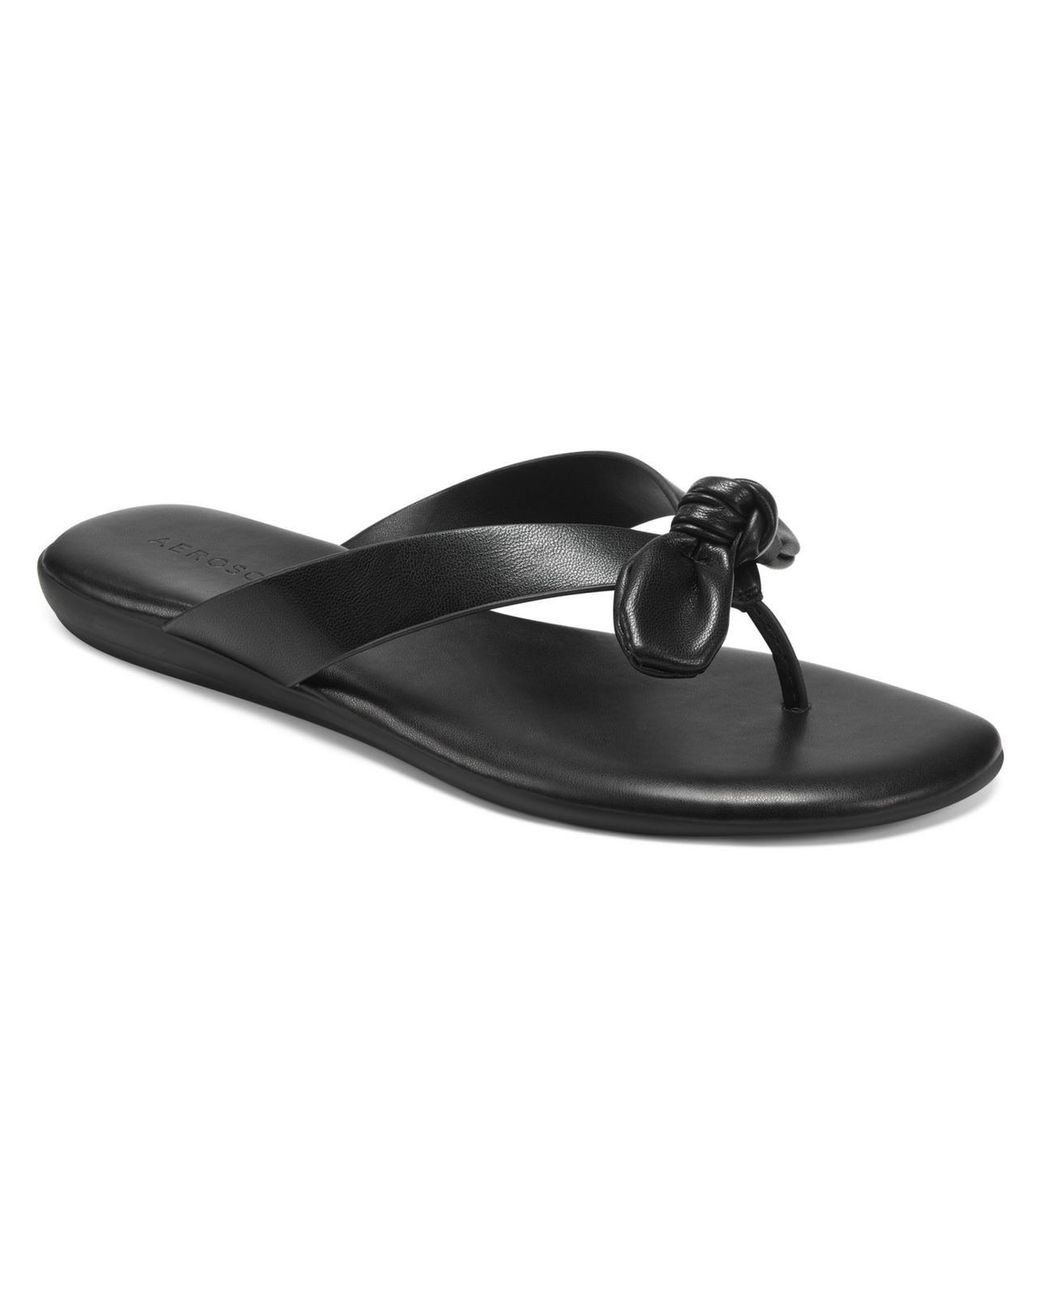 Aerosoles Cara Laceless Slip On Thong Sandals in Black | Lyst